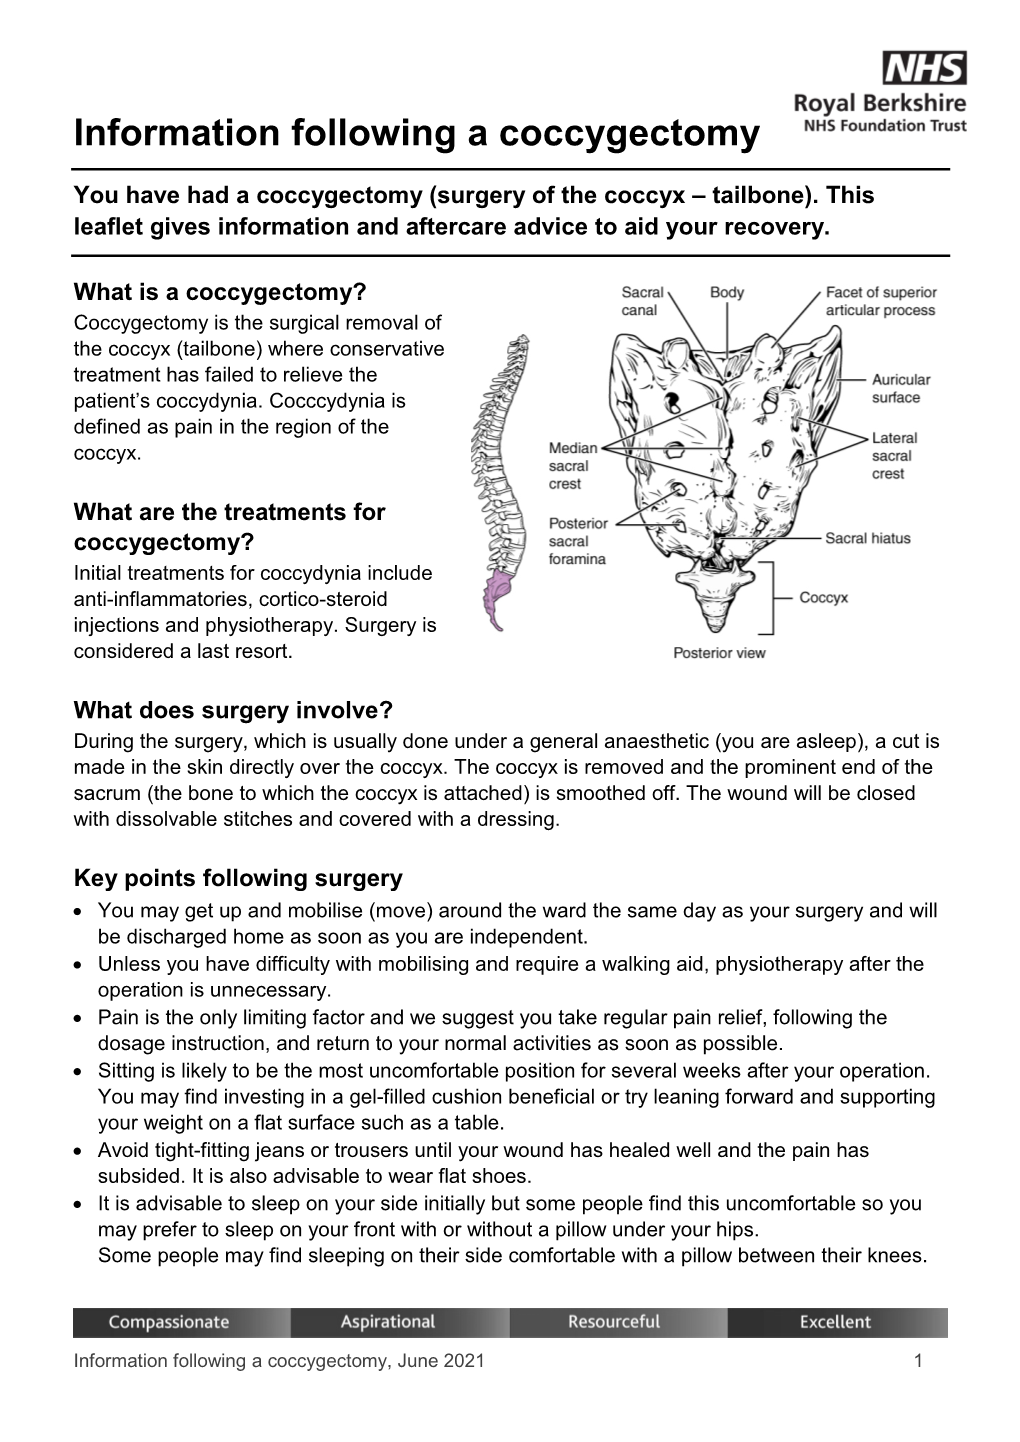 Information Following a Coccygectomy